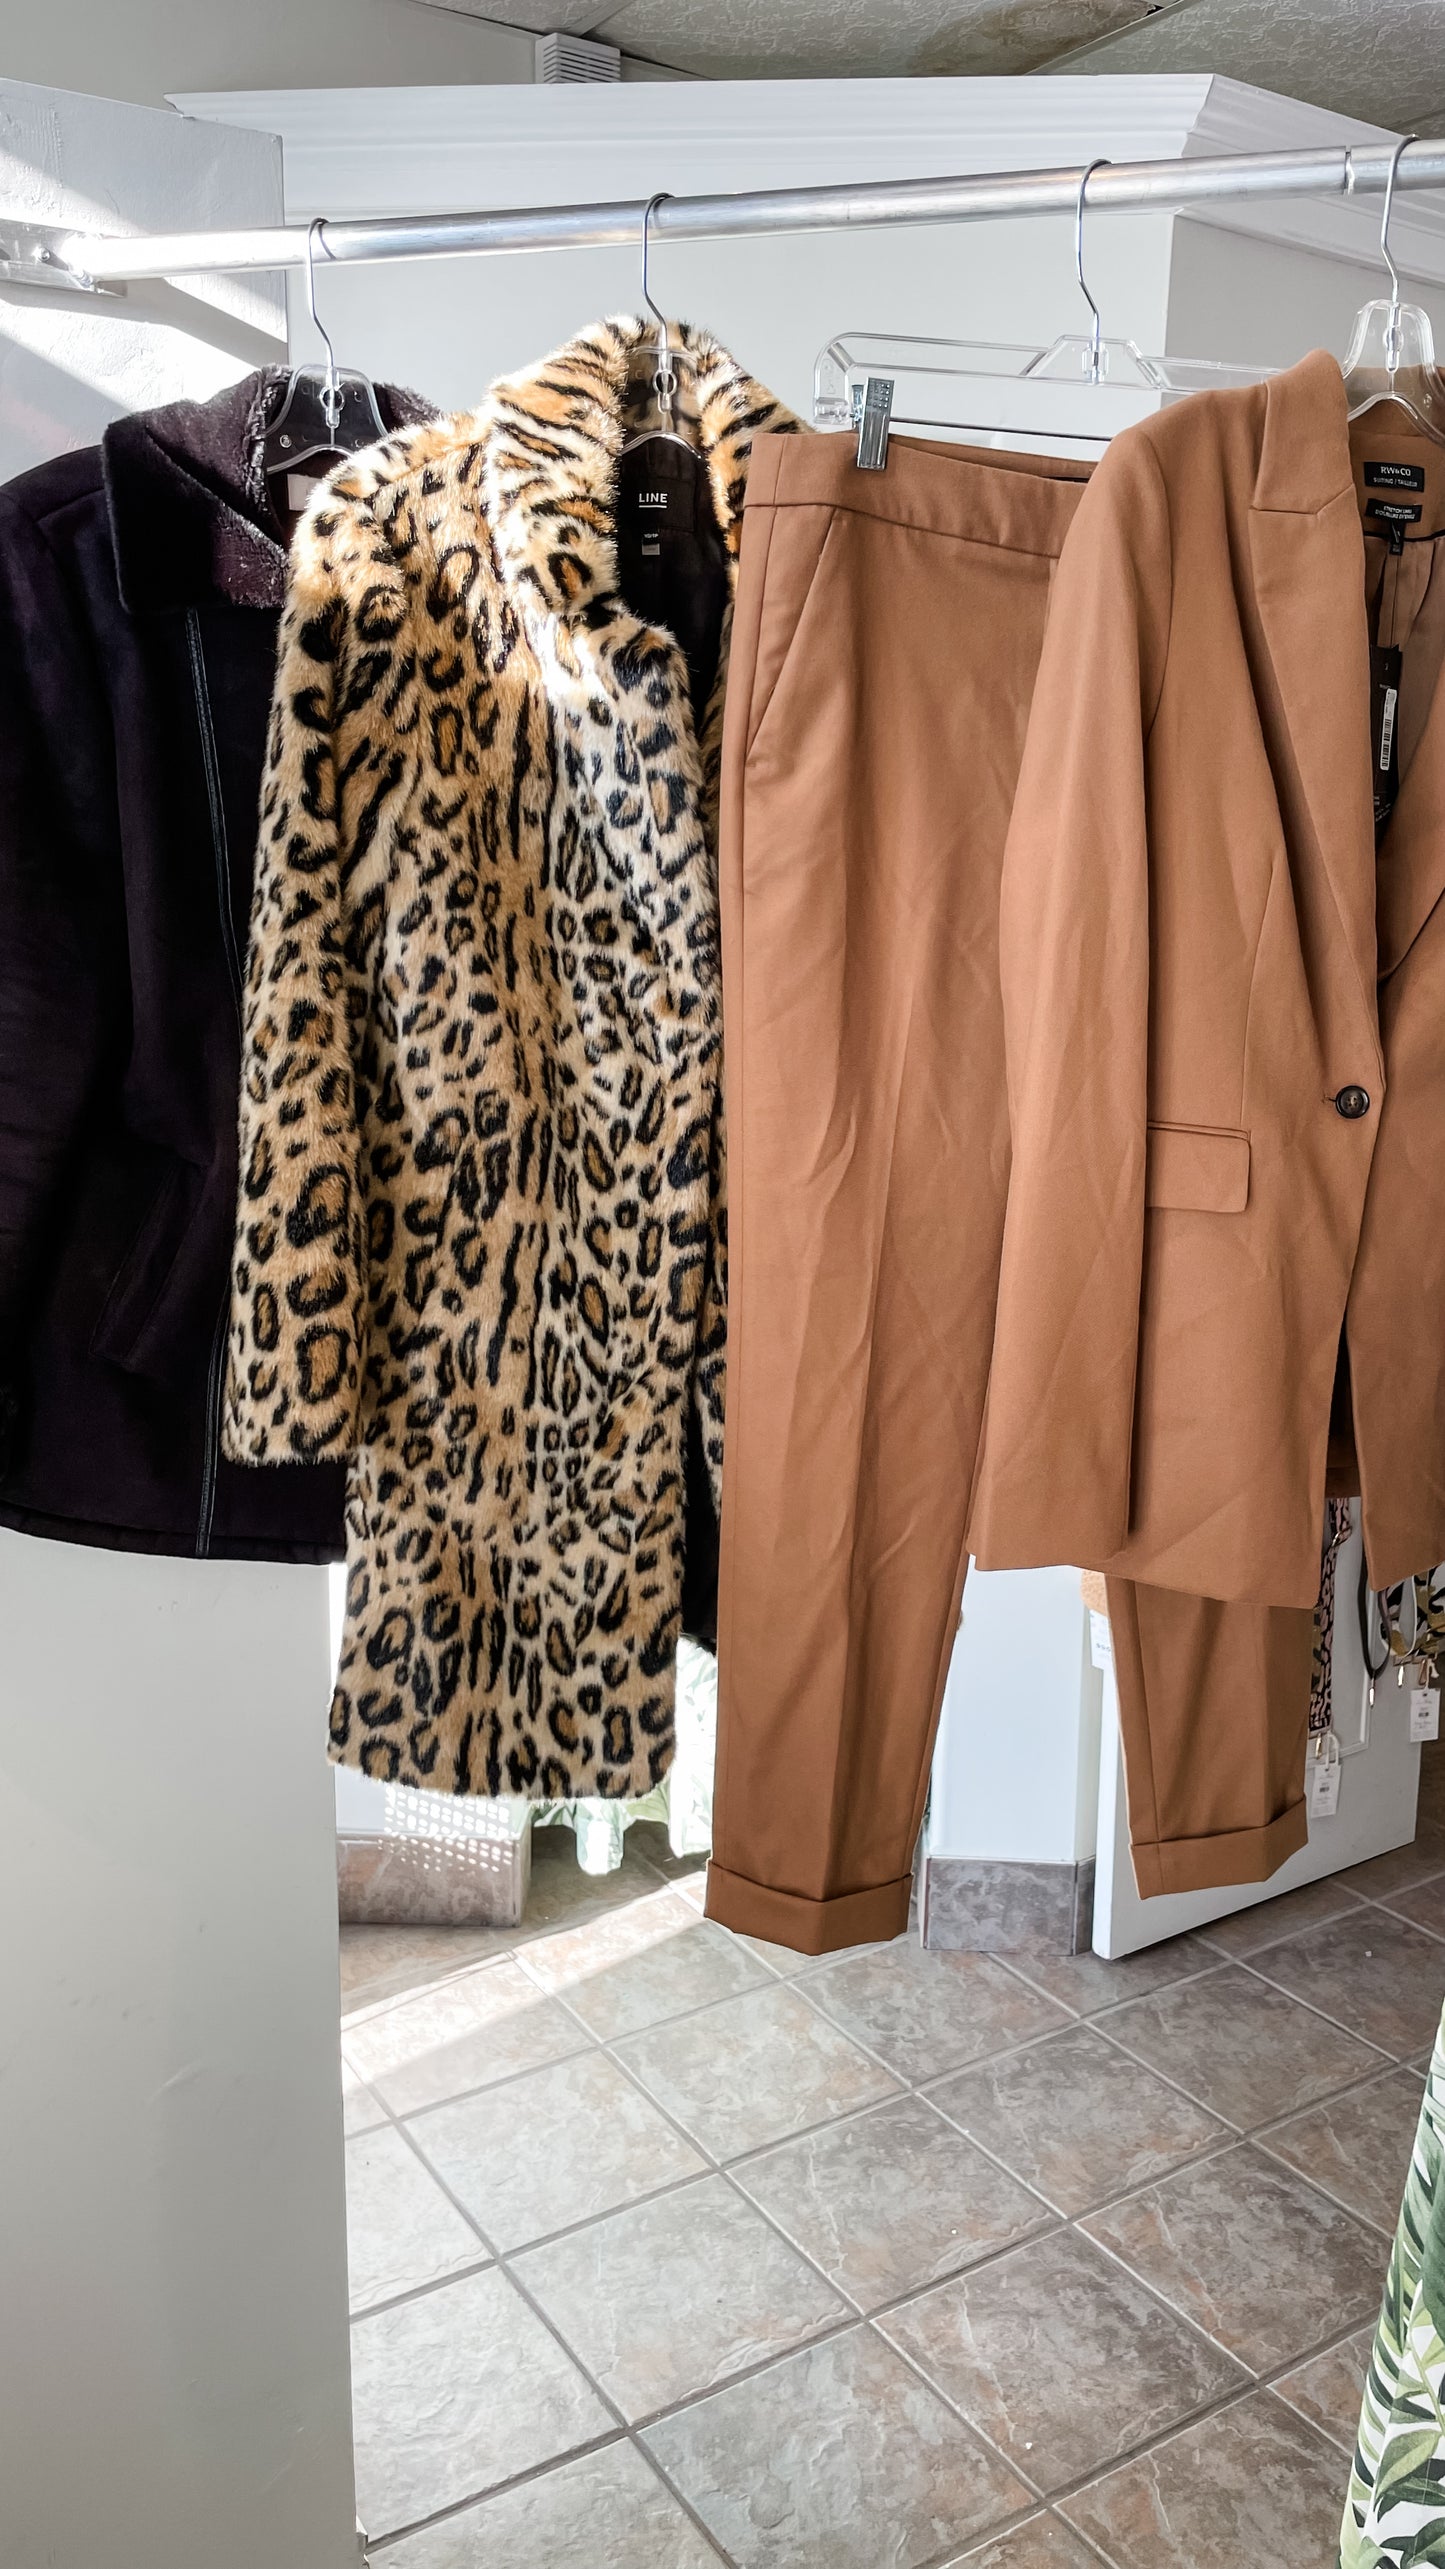 LINE Cheetah Leopard Print Faux Fur Long Jacket - XS/S